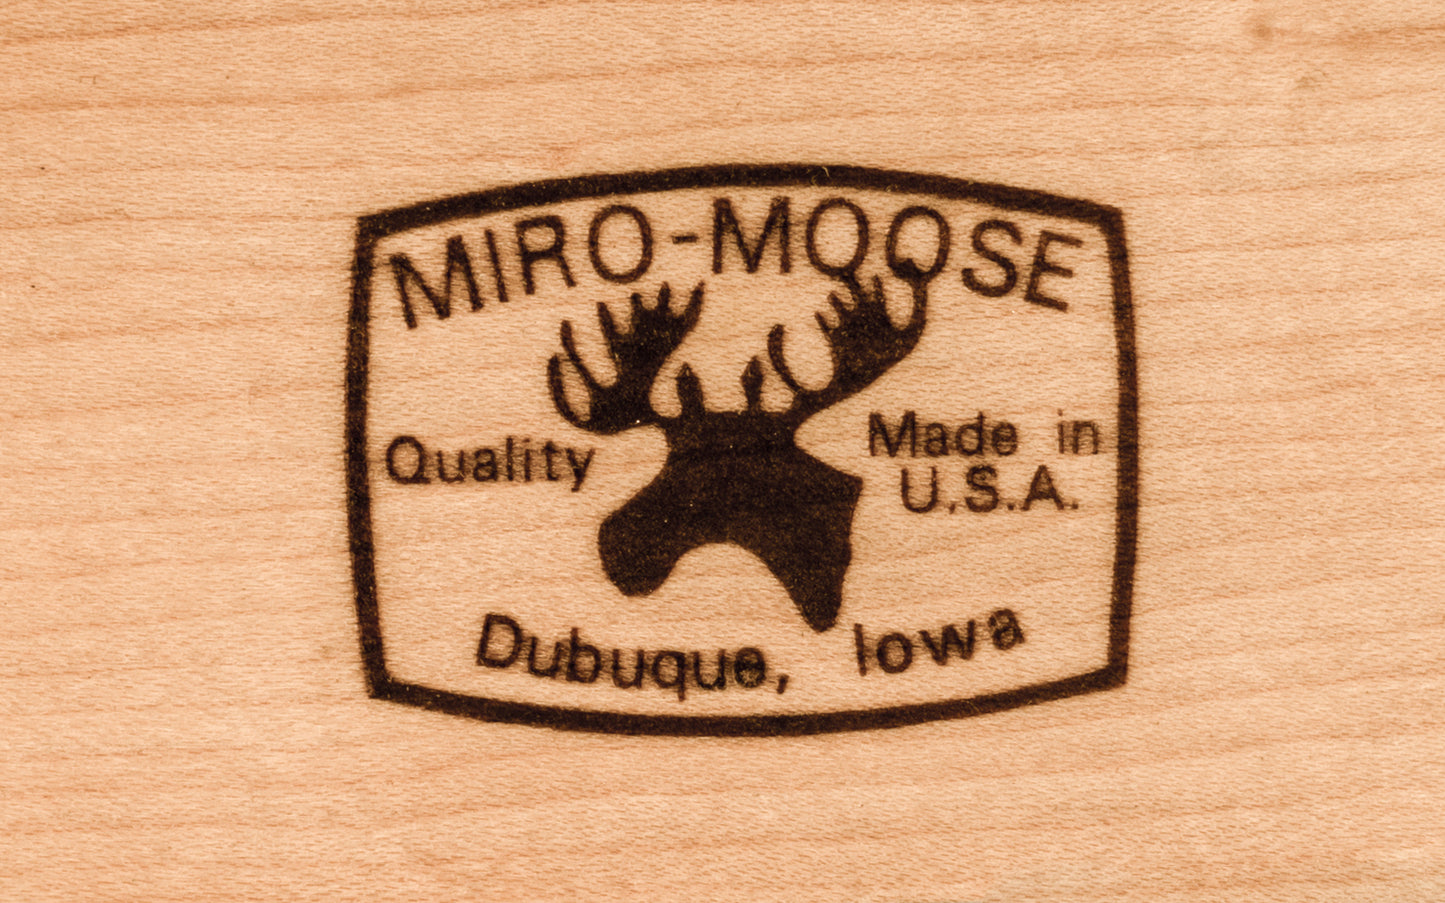 Dubuque "Miro-Moose" 24" x 4-1/2" Wooden Cam Clamp